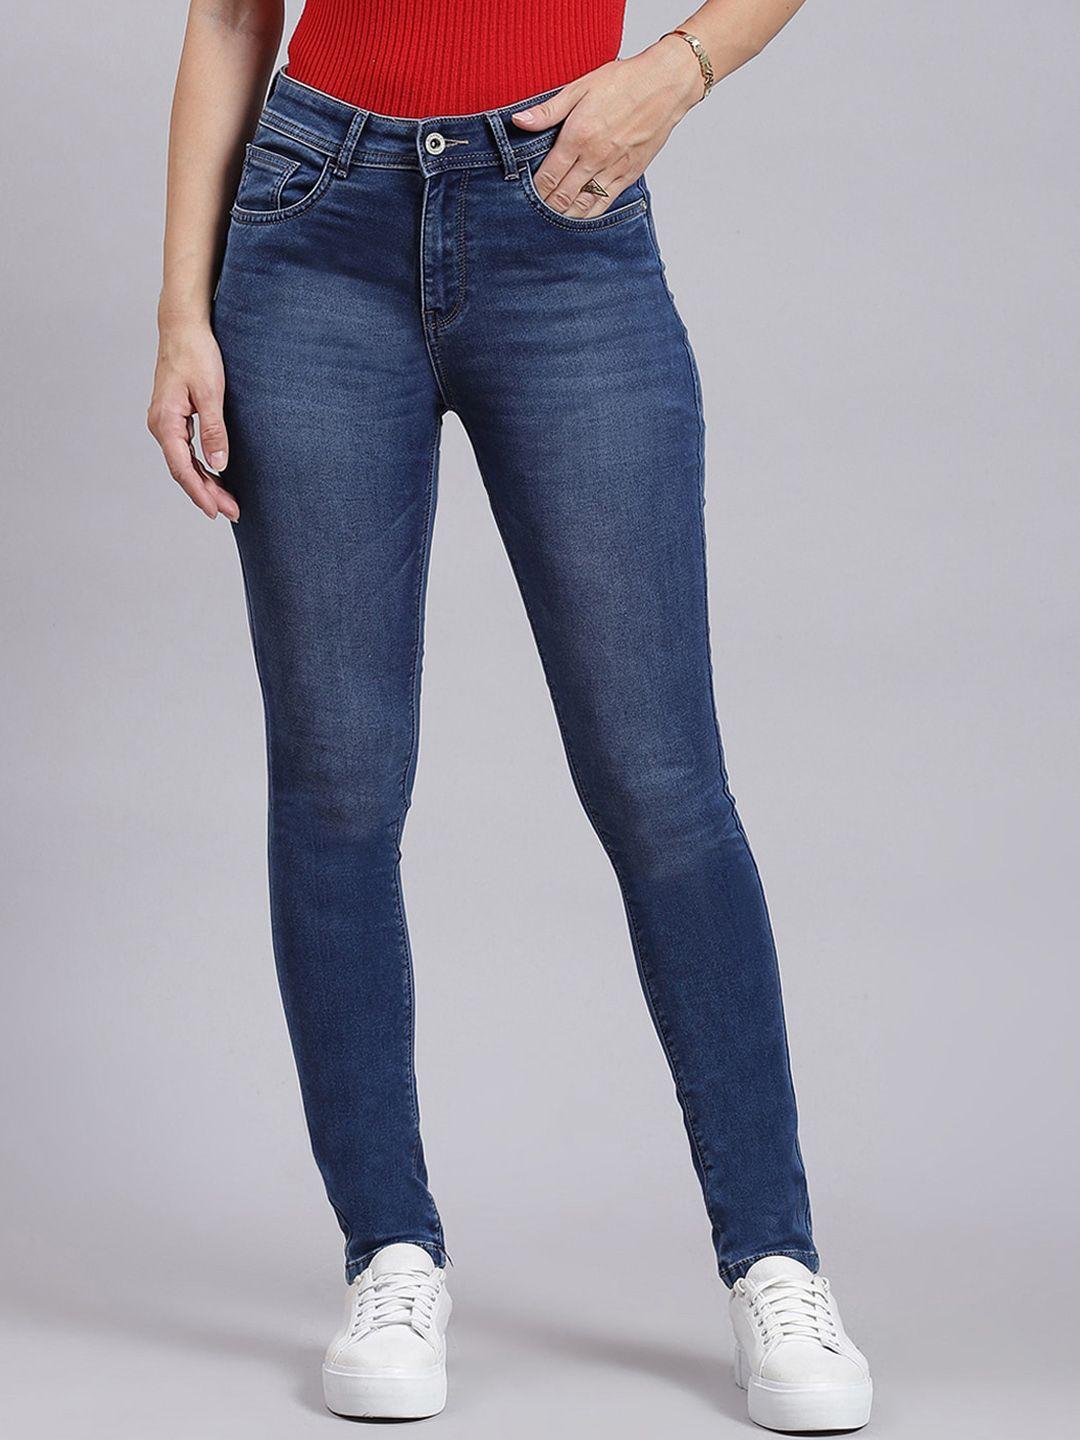 monte carlo women smart mid-rise slim fit heavy fade jeans